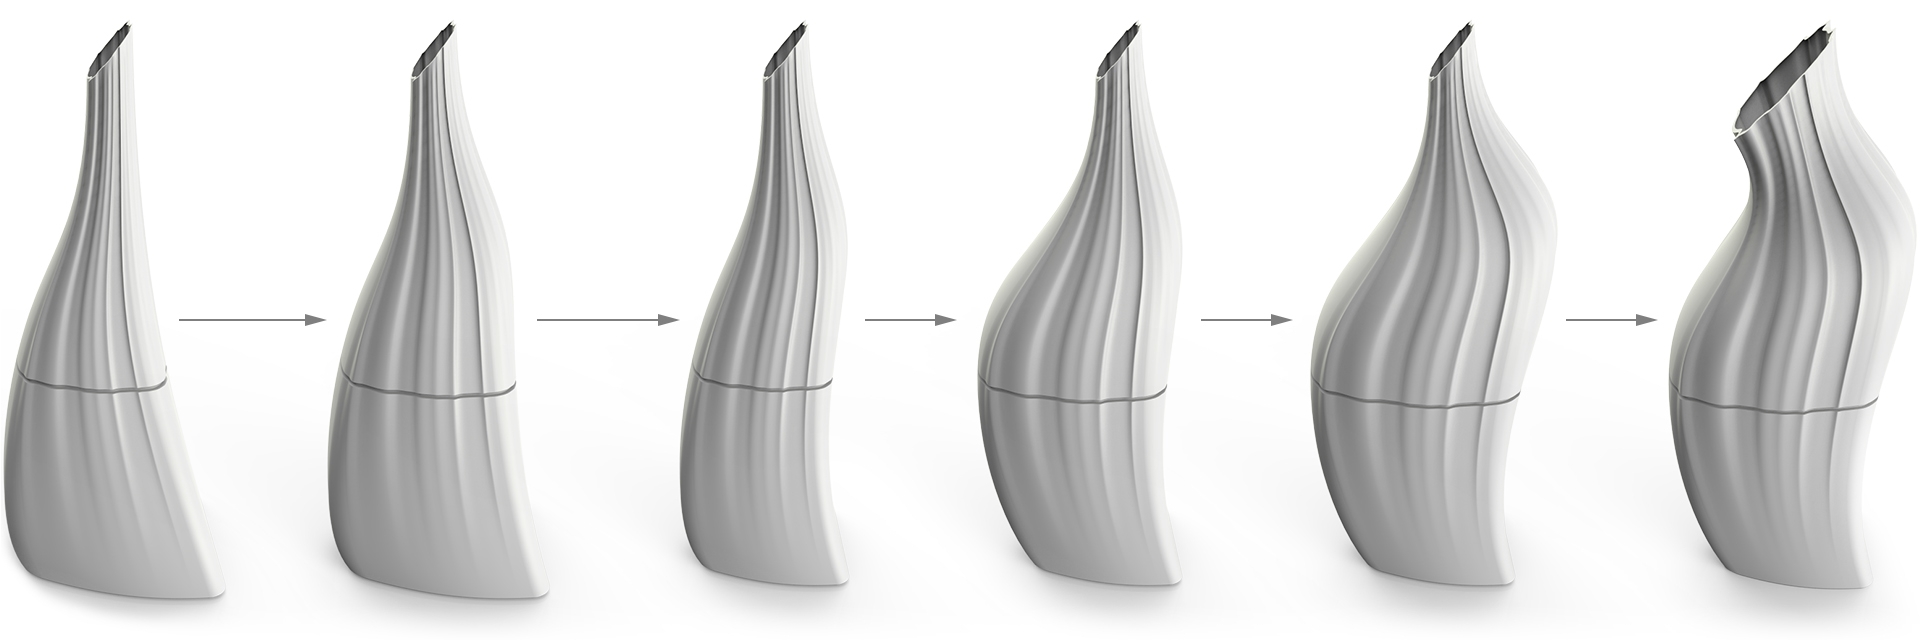 Progressively changing the urn shape through parametric design.